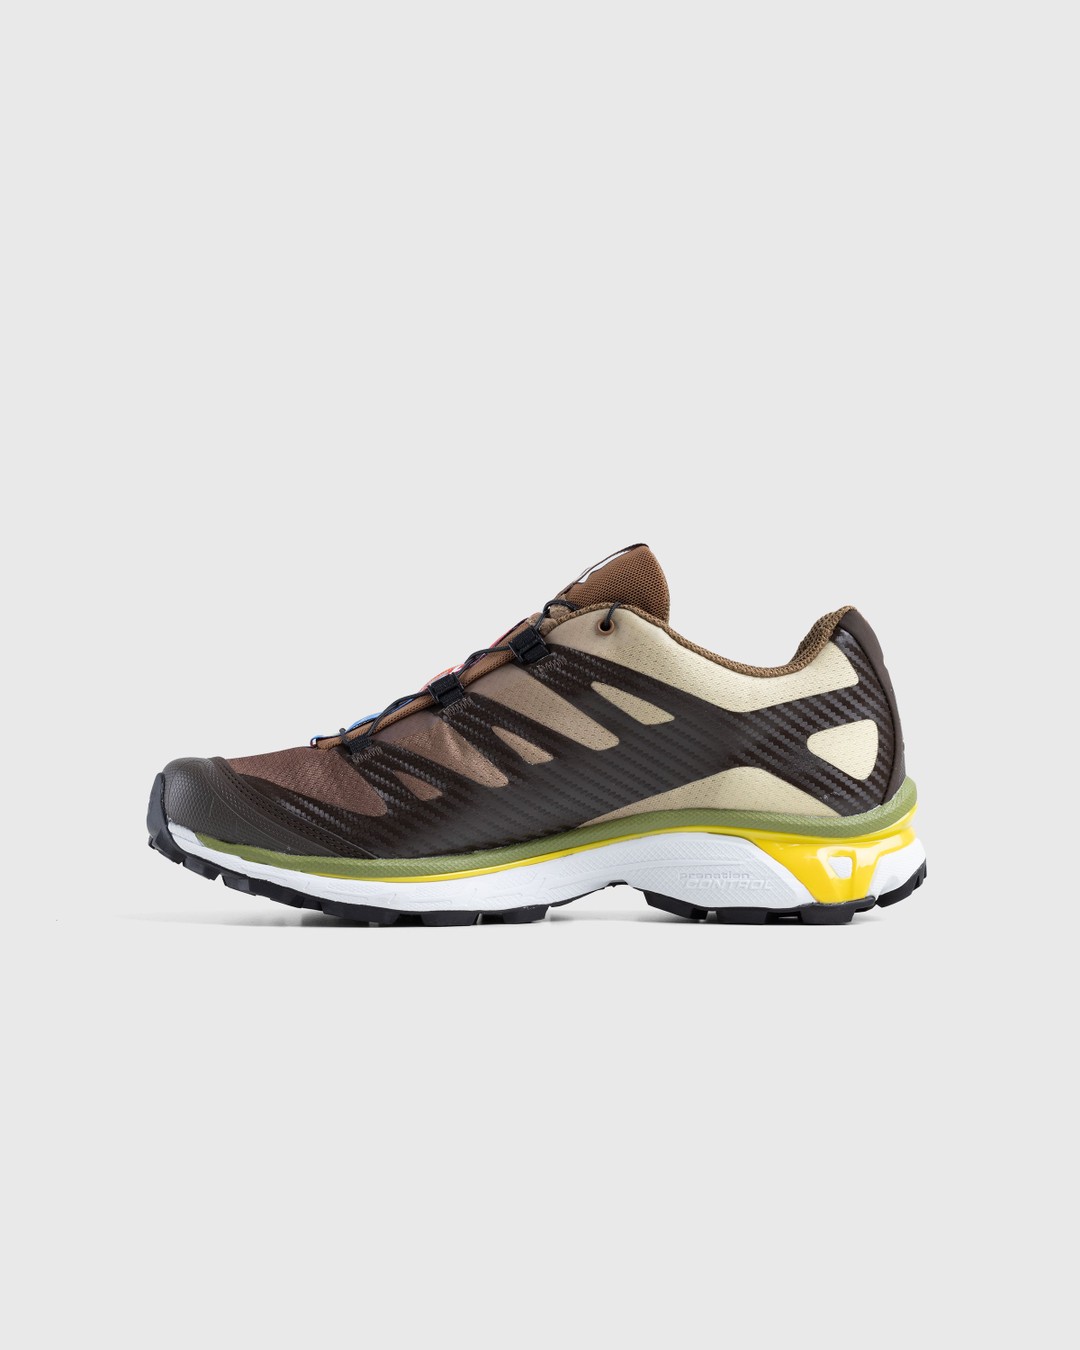 Salomon – XT-4 Delicioso/Toffee/Empire Yellow - Sneakers - Brown - Image 2